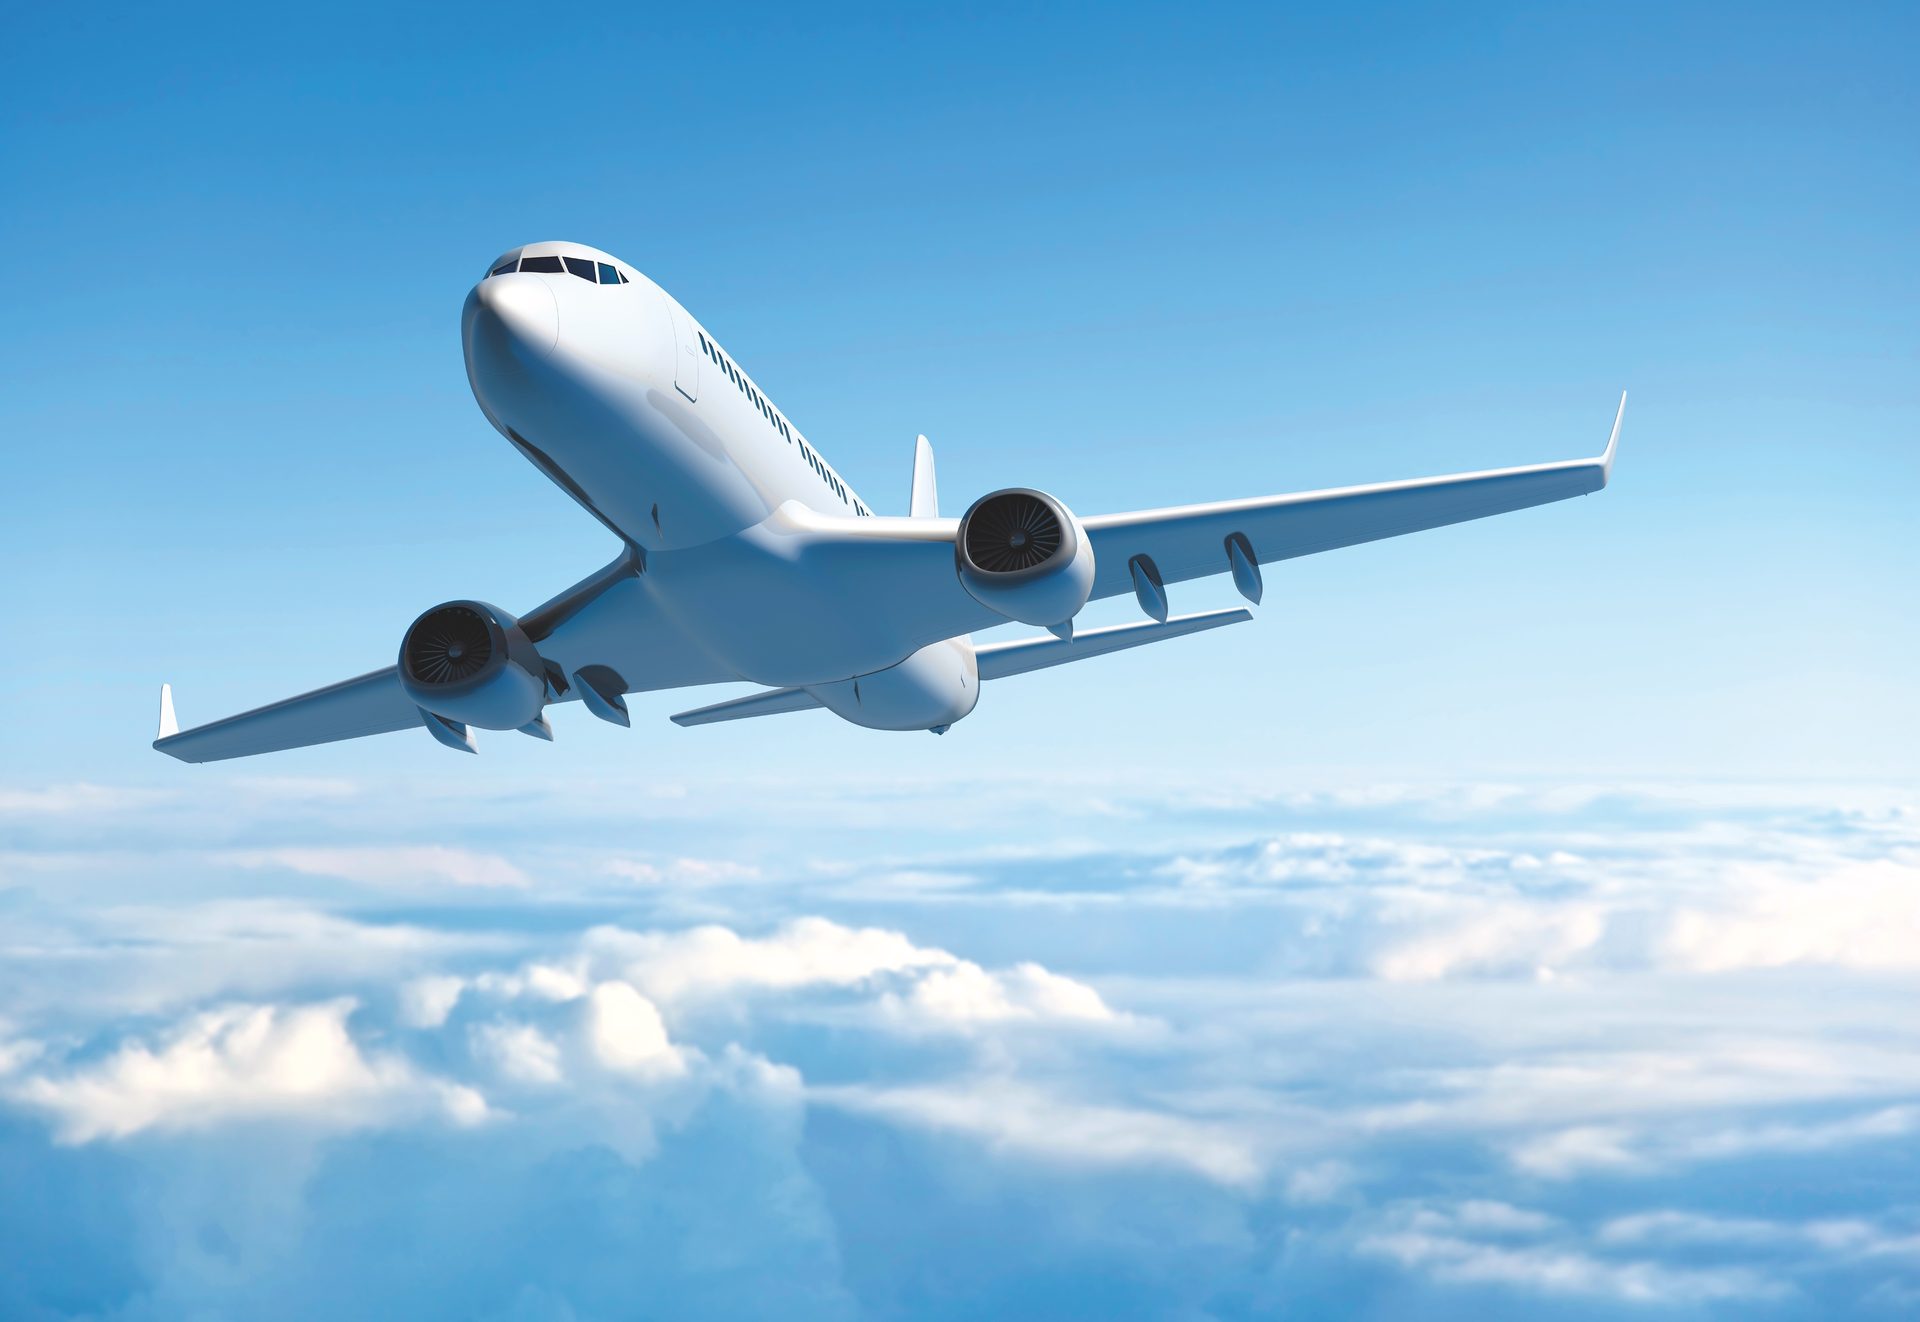 Jet engine, Aerospace manufacturer, Cloud, Sky, Aircraft, Vehicle, Airplane, Twinjet, Flap